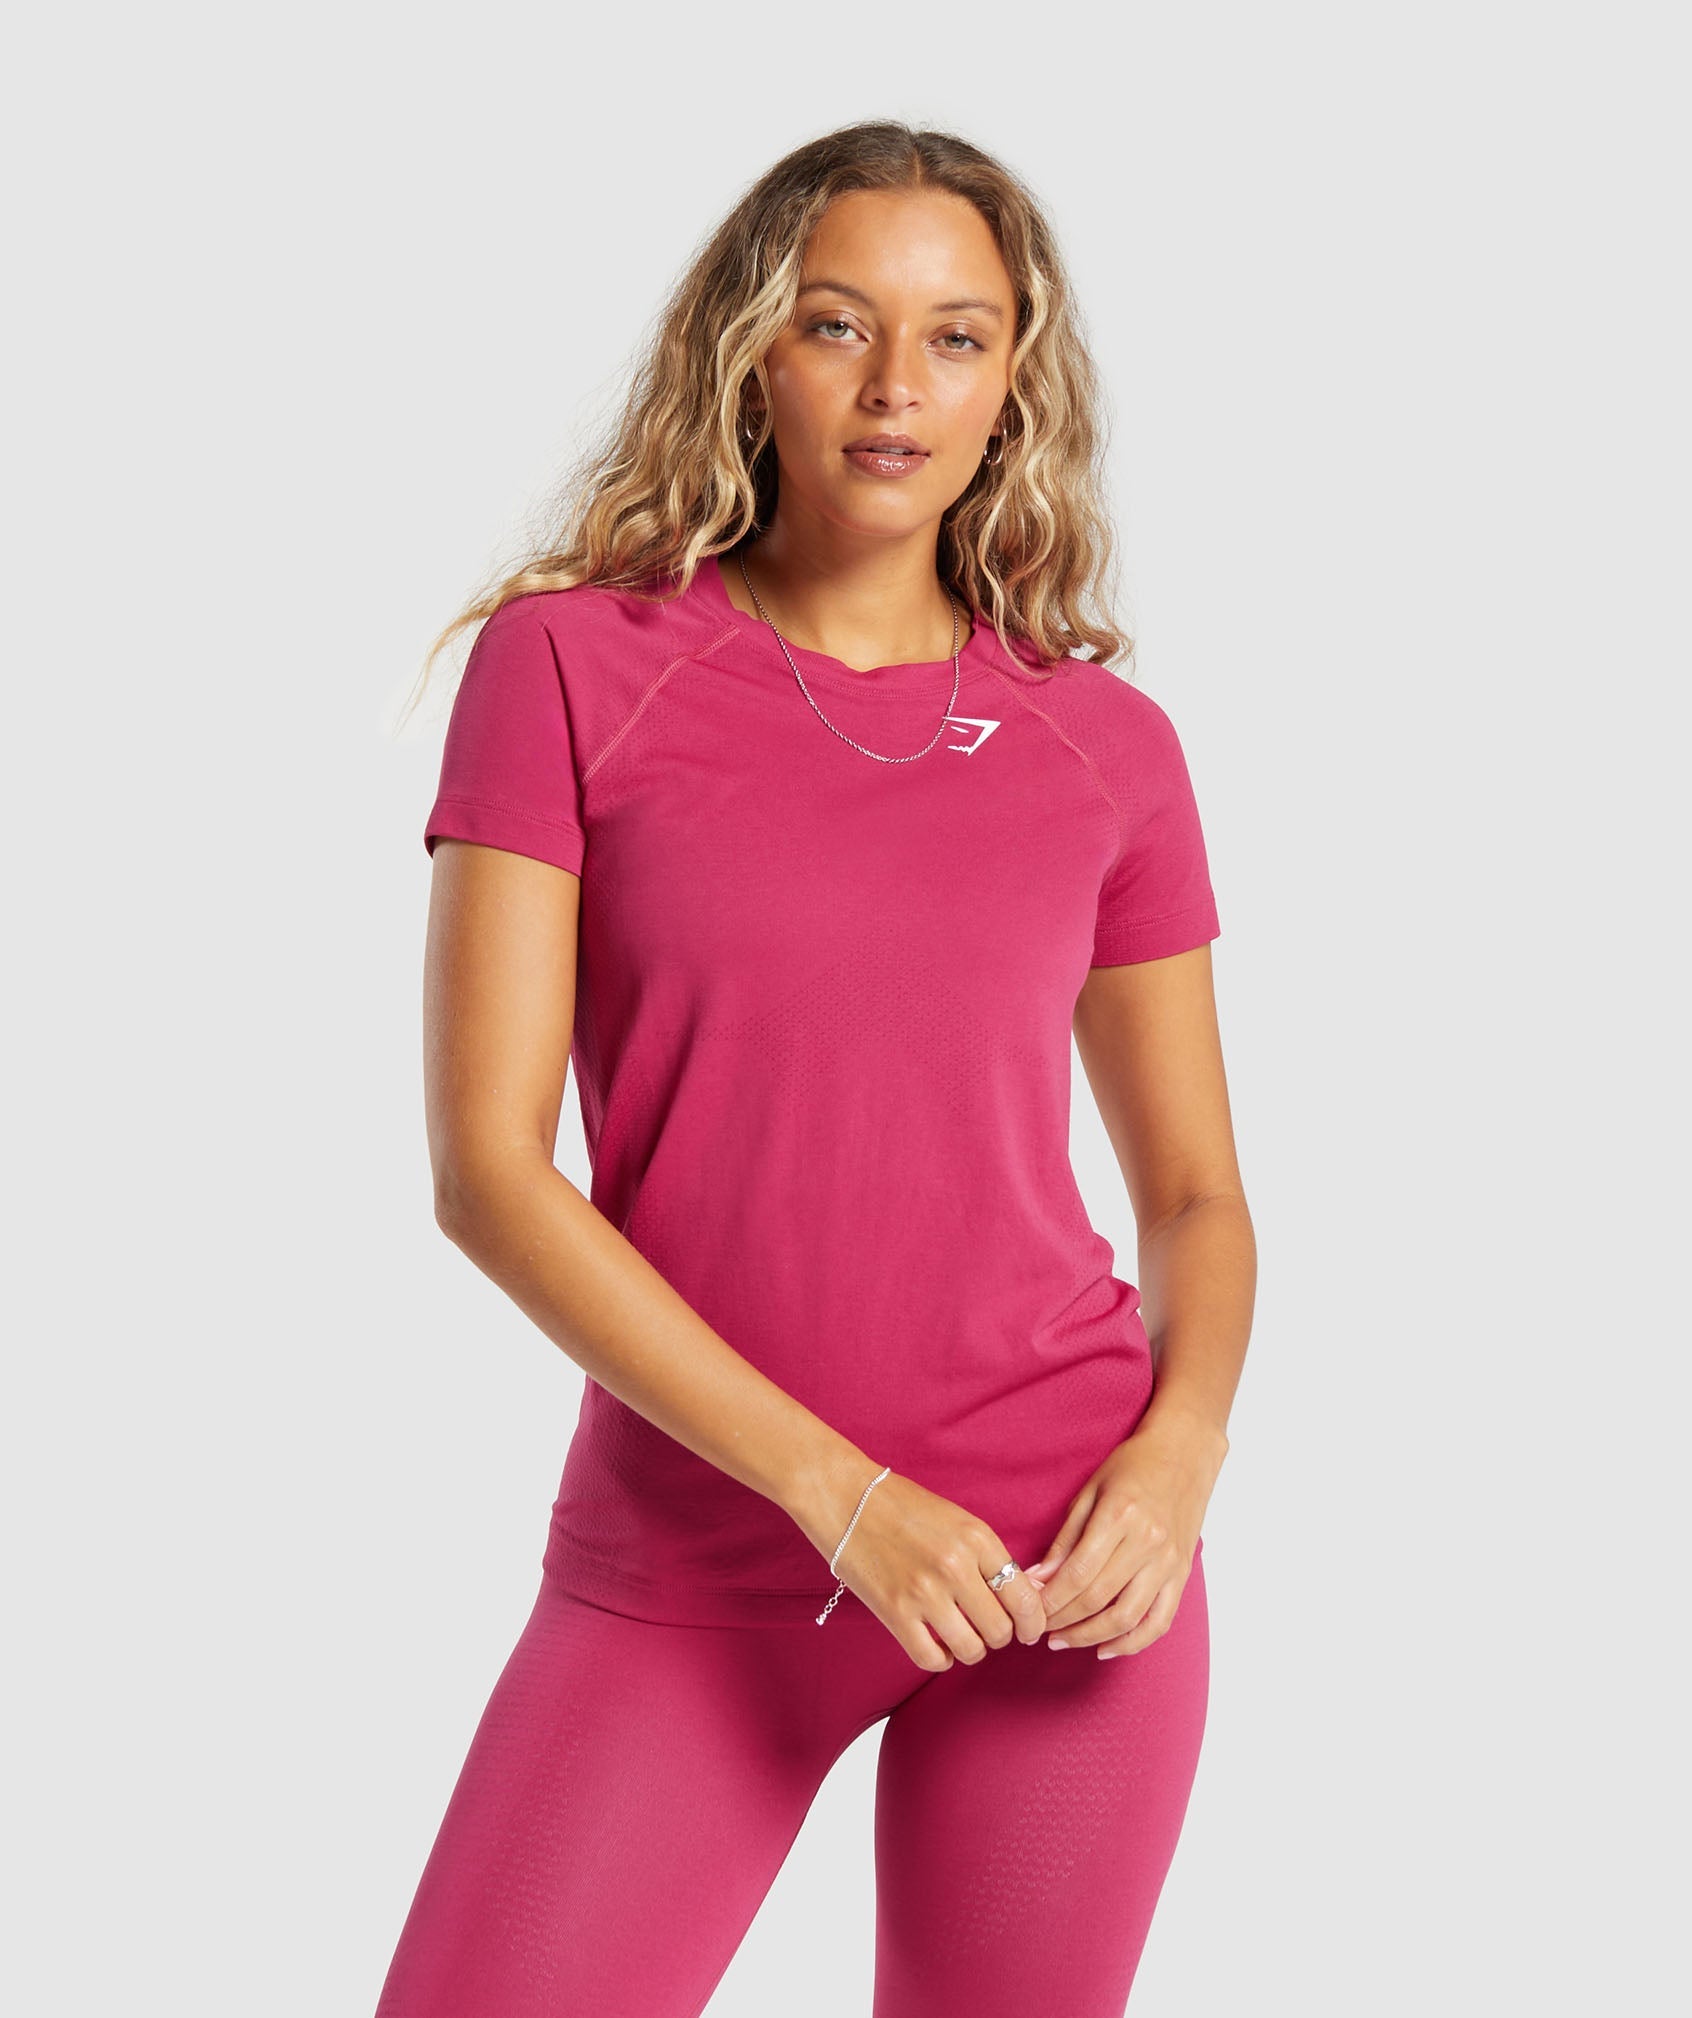 Vital Seamless  2.0 Light T Shirt dans Vintage Pink/Marlest en rupture de stock